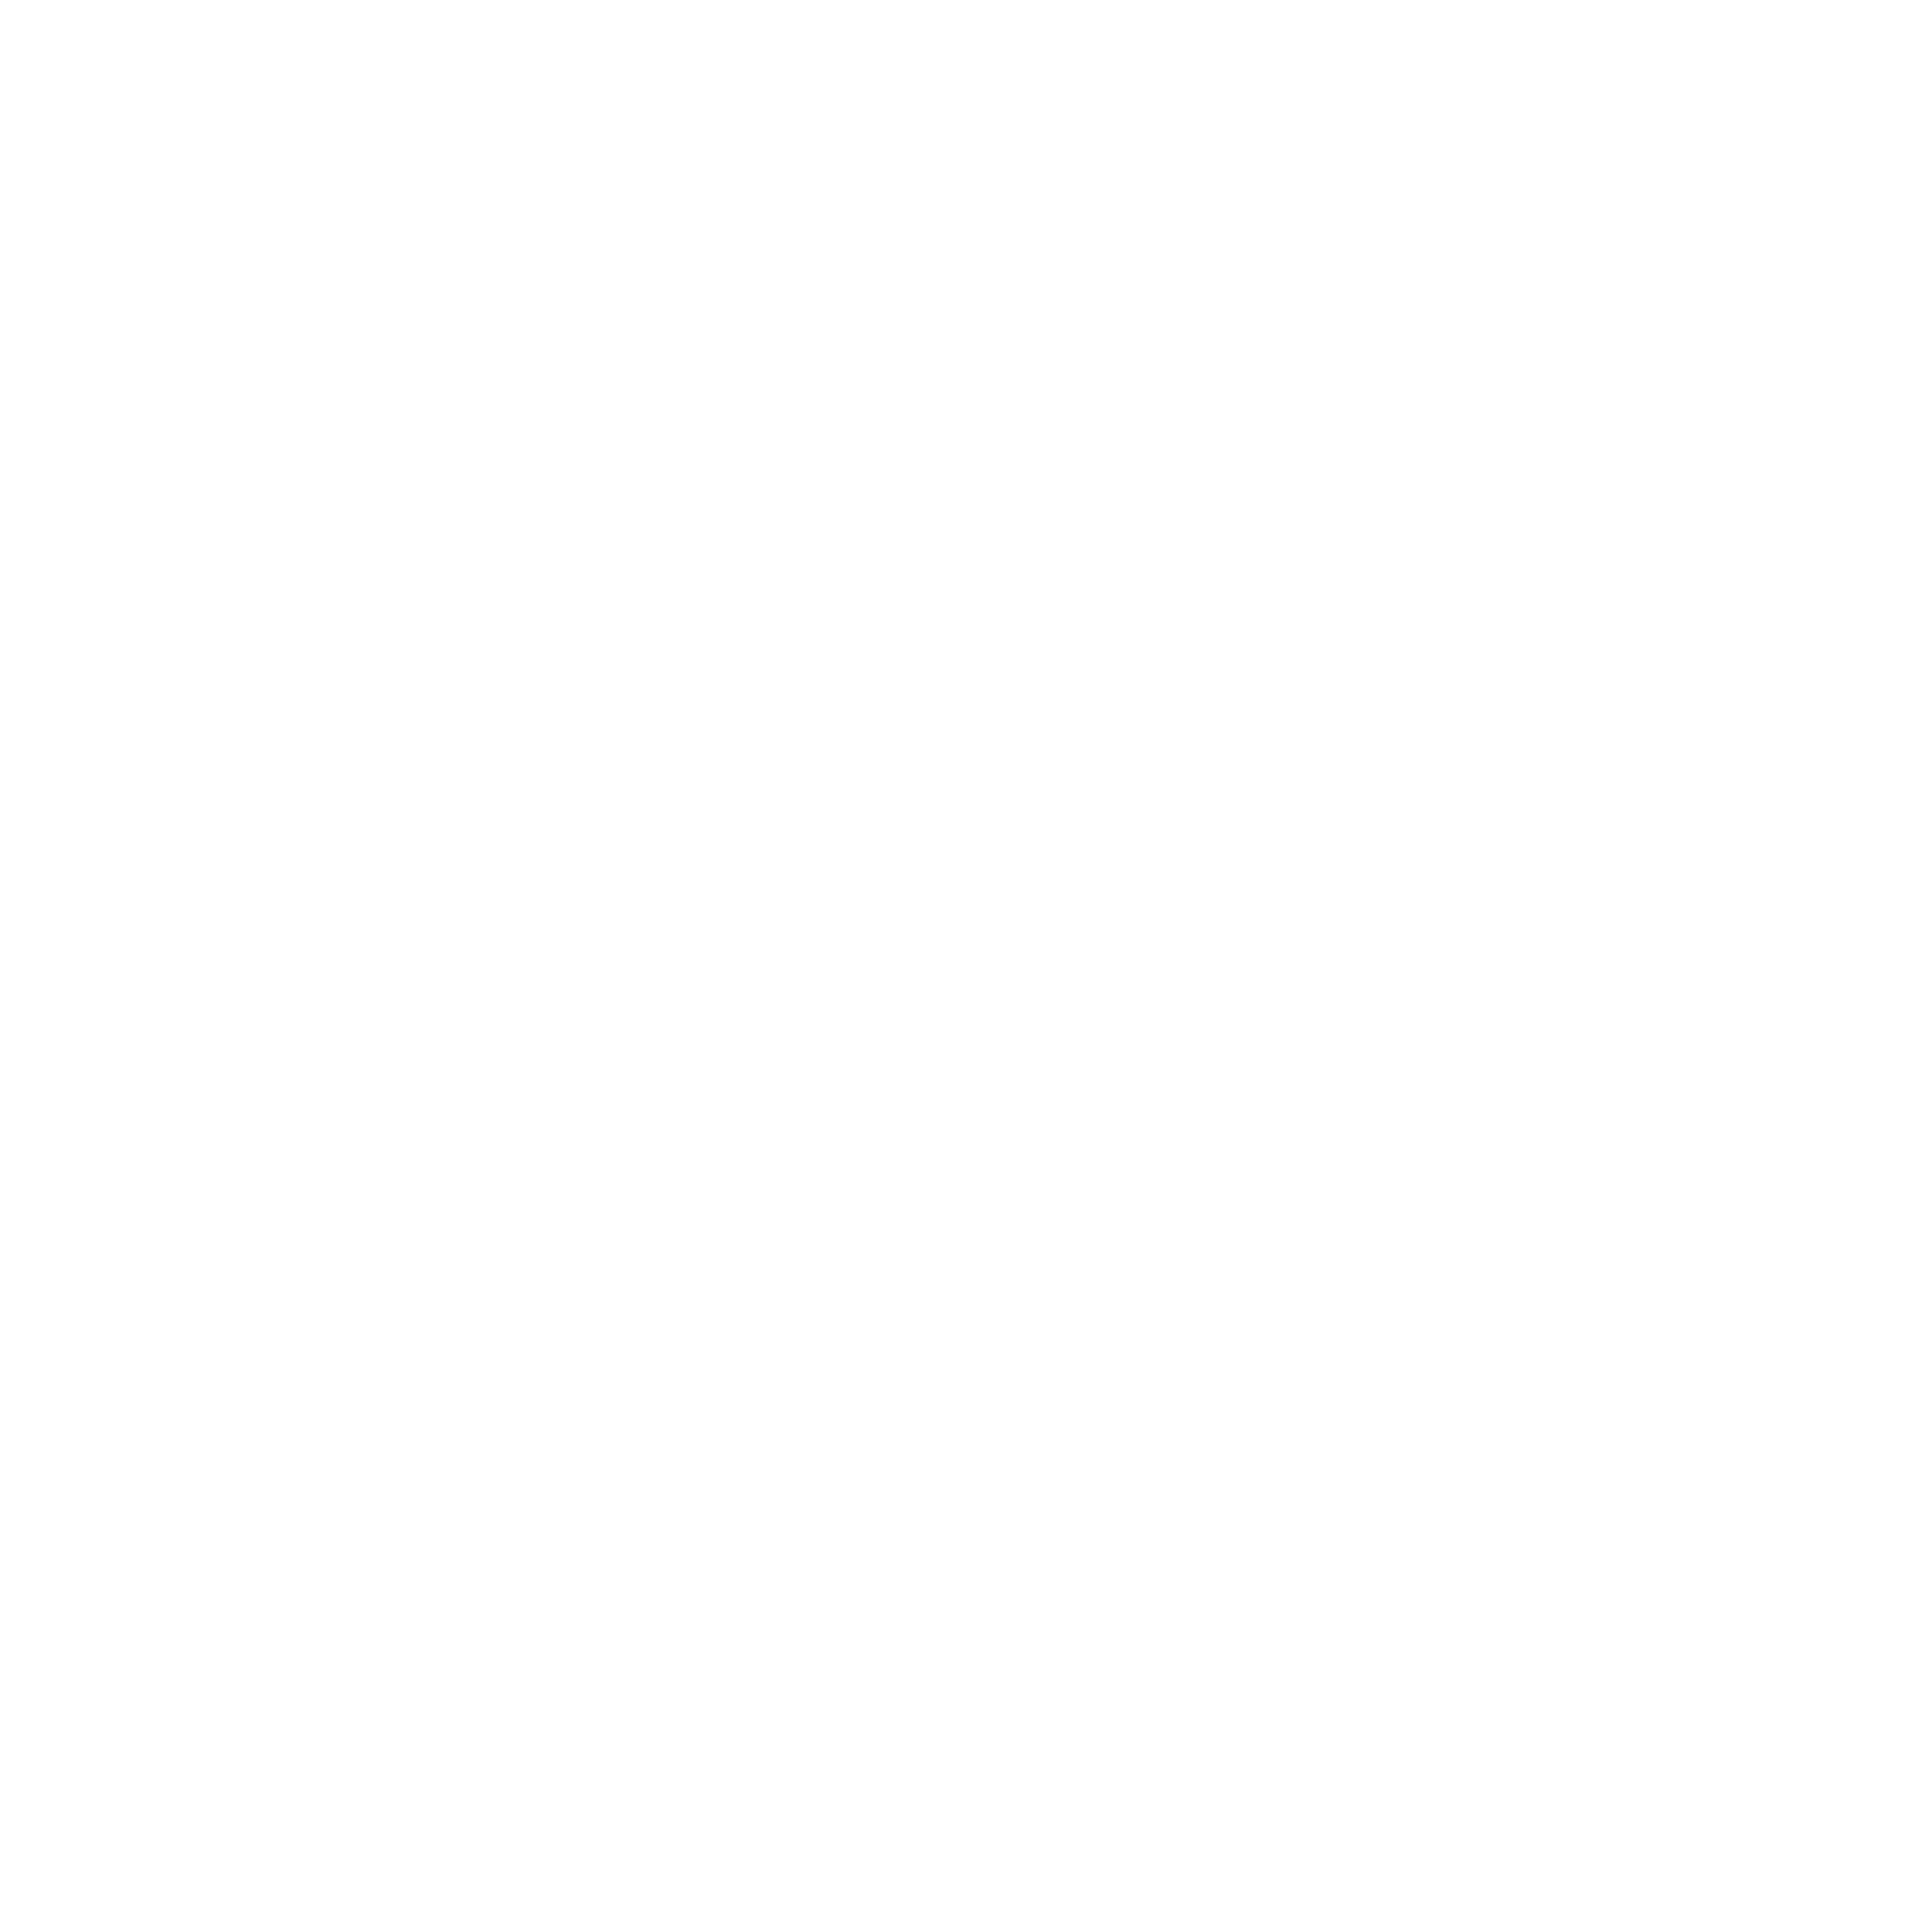 https://www.xerezclubdeportivo.es/wp-content/uploads/2022/09/logo_lugo.png